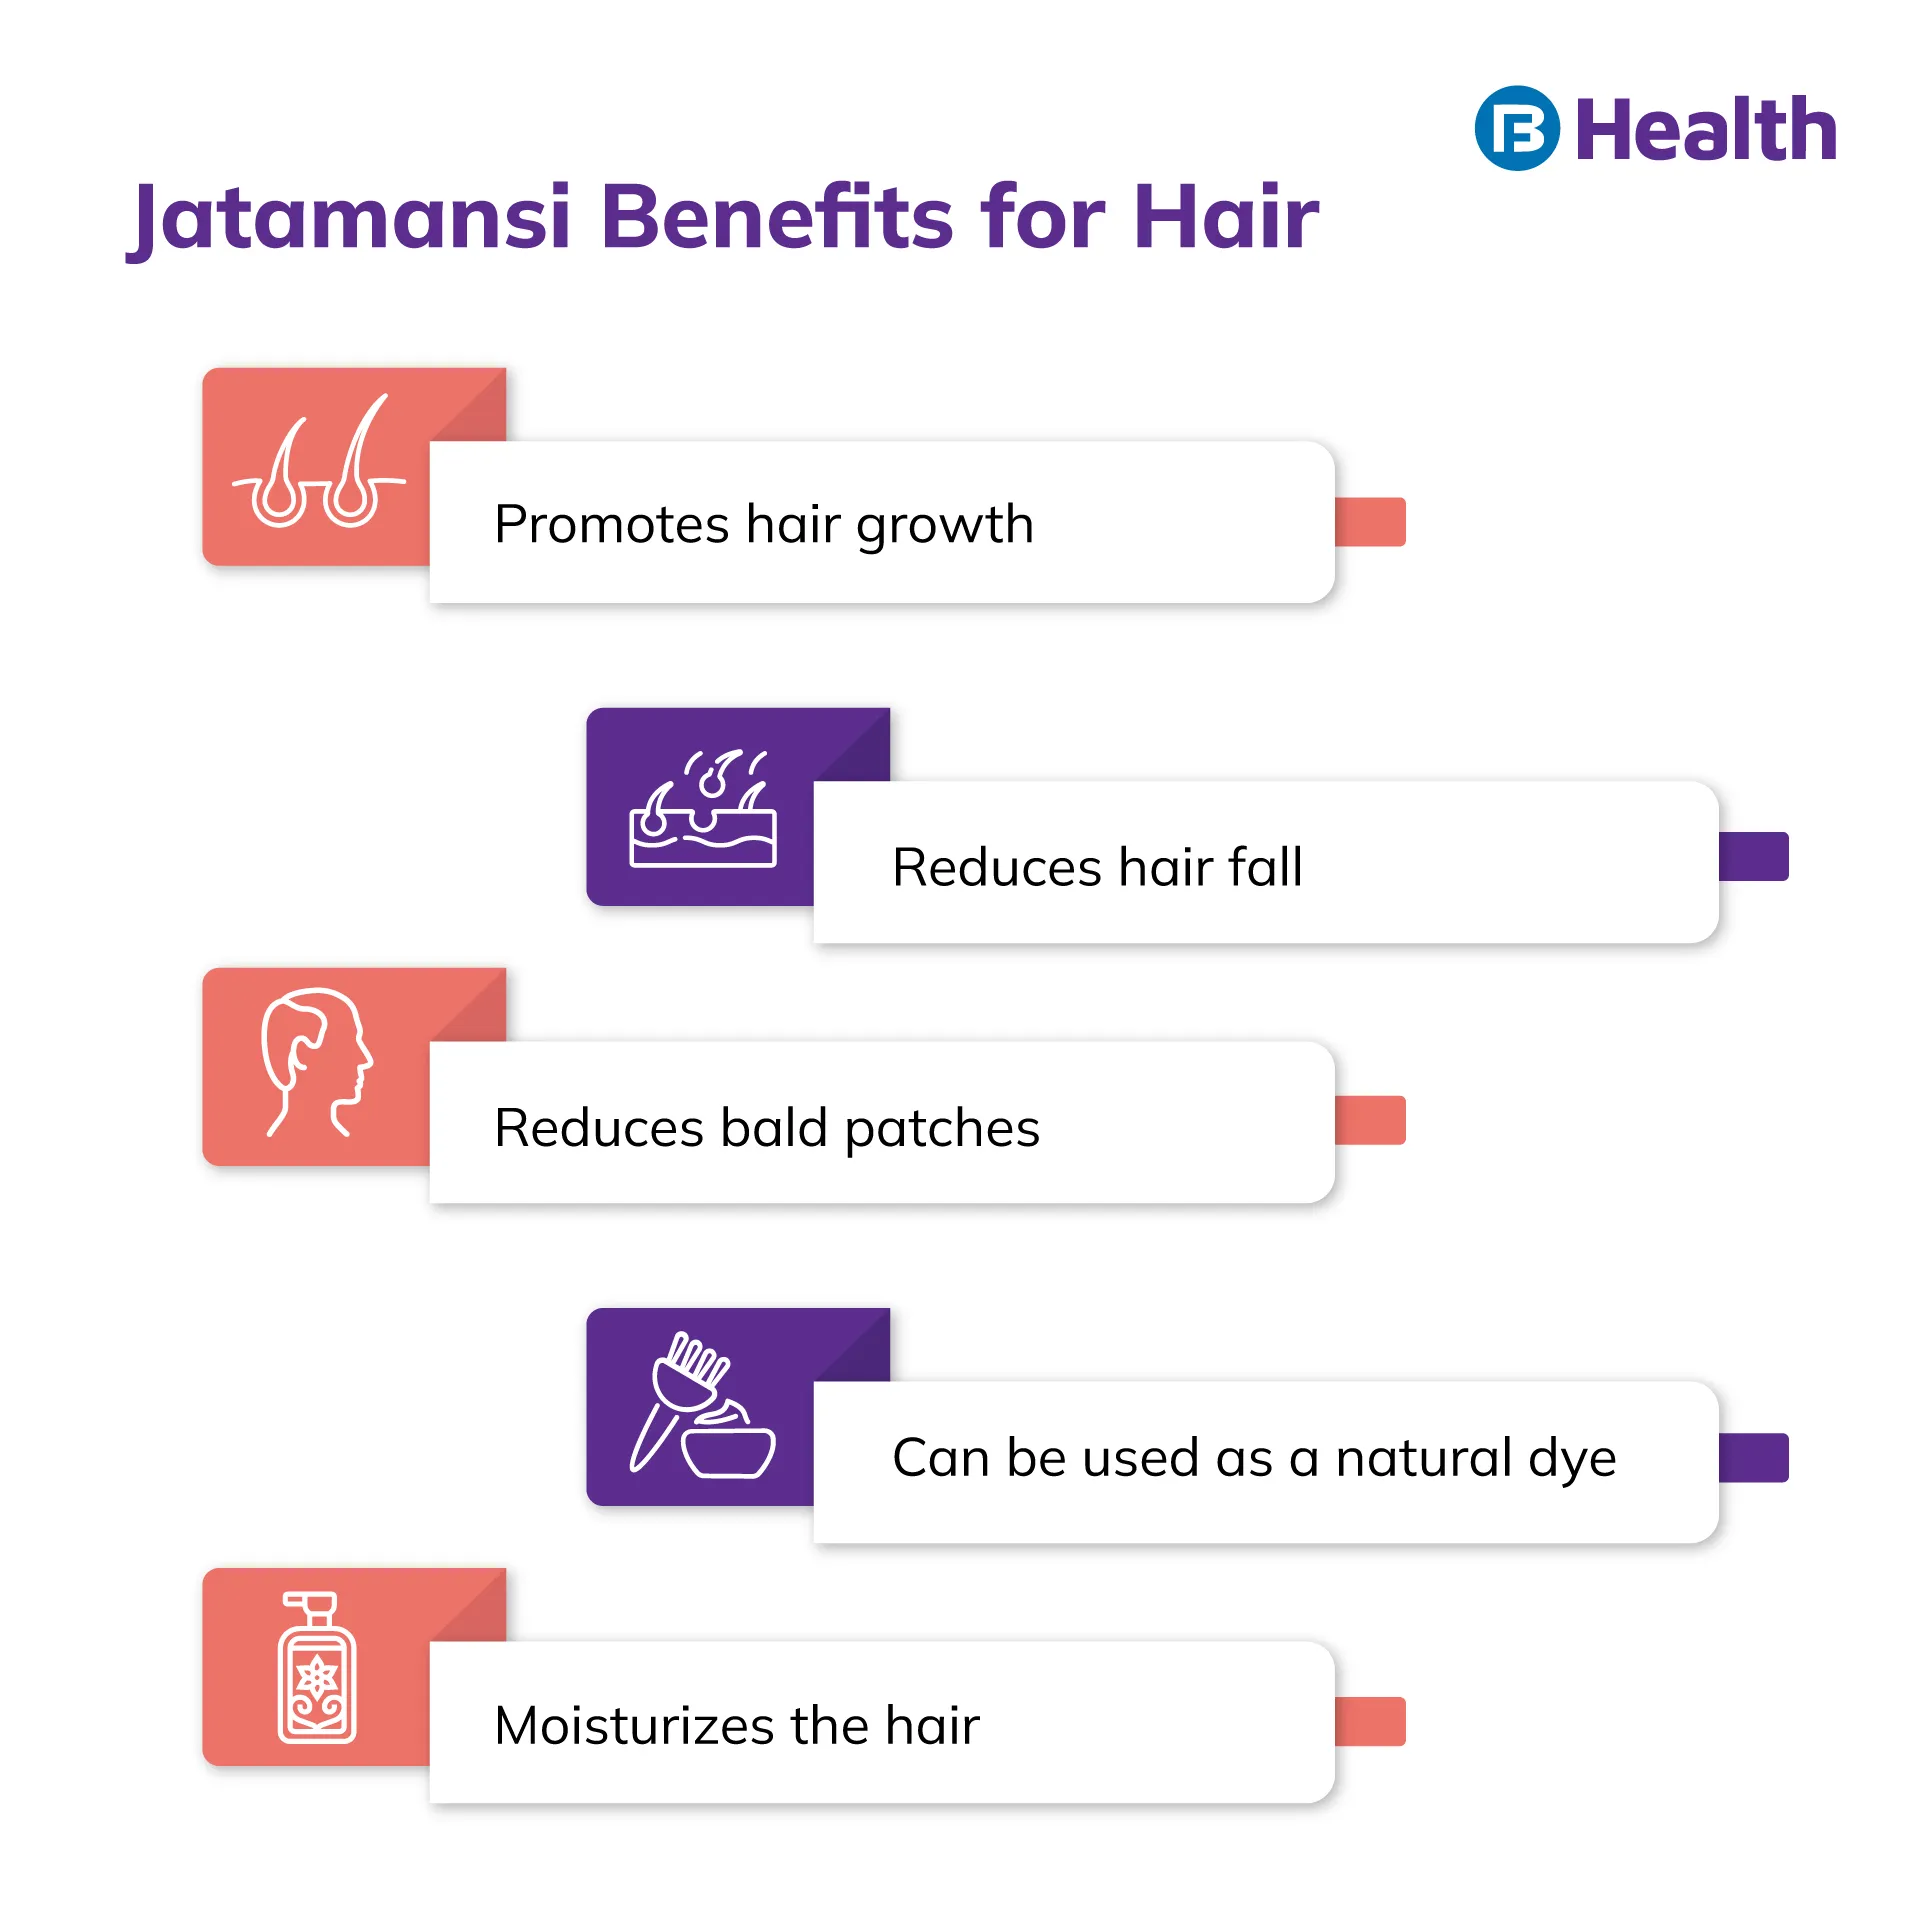 Jatamansi Benefits for hair